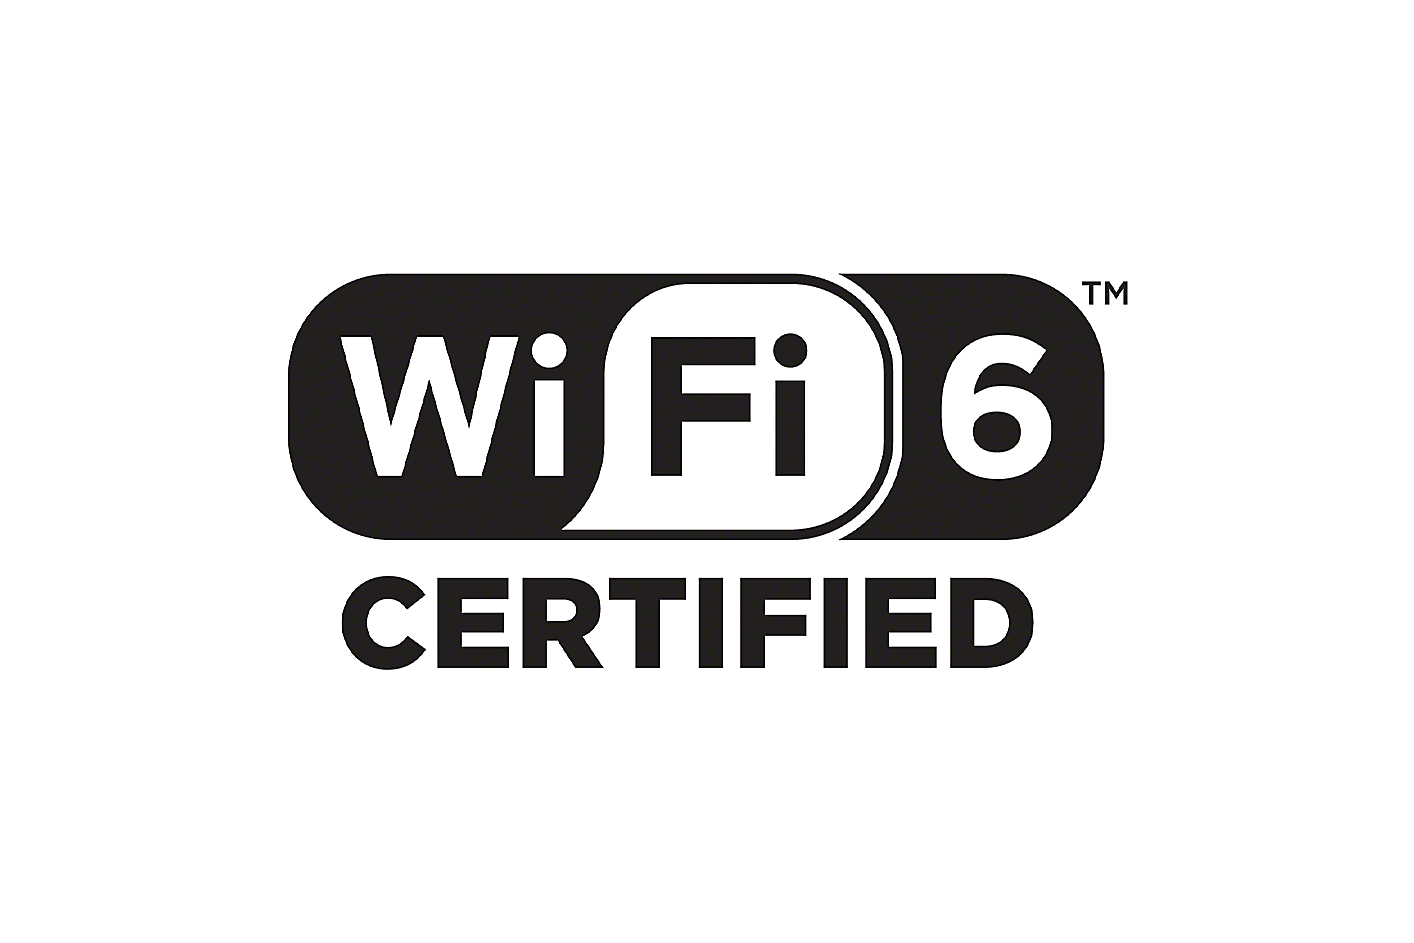 Wi-Fi 6 certified 標誌